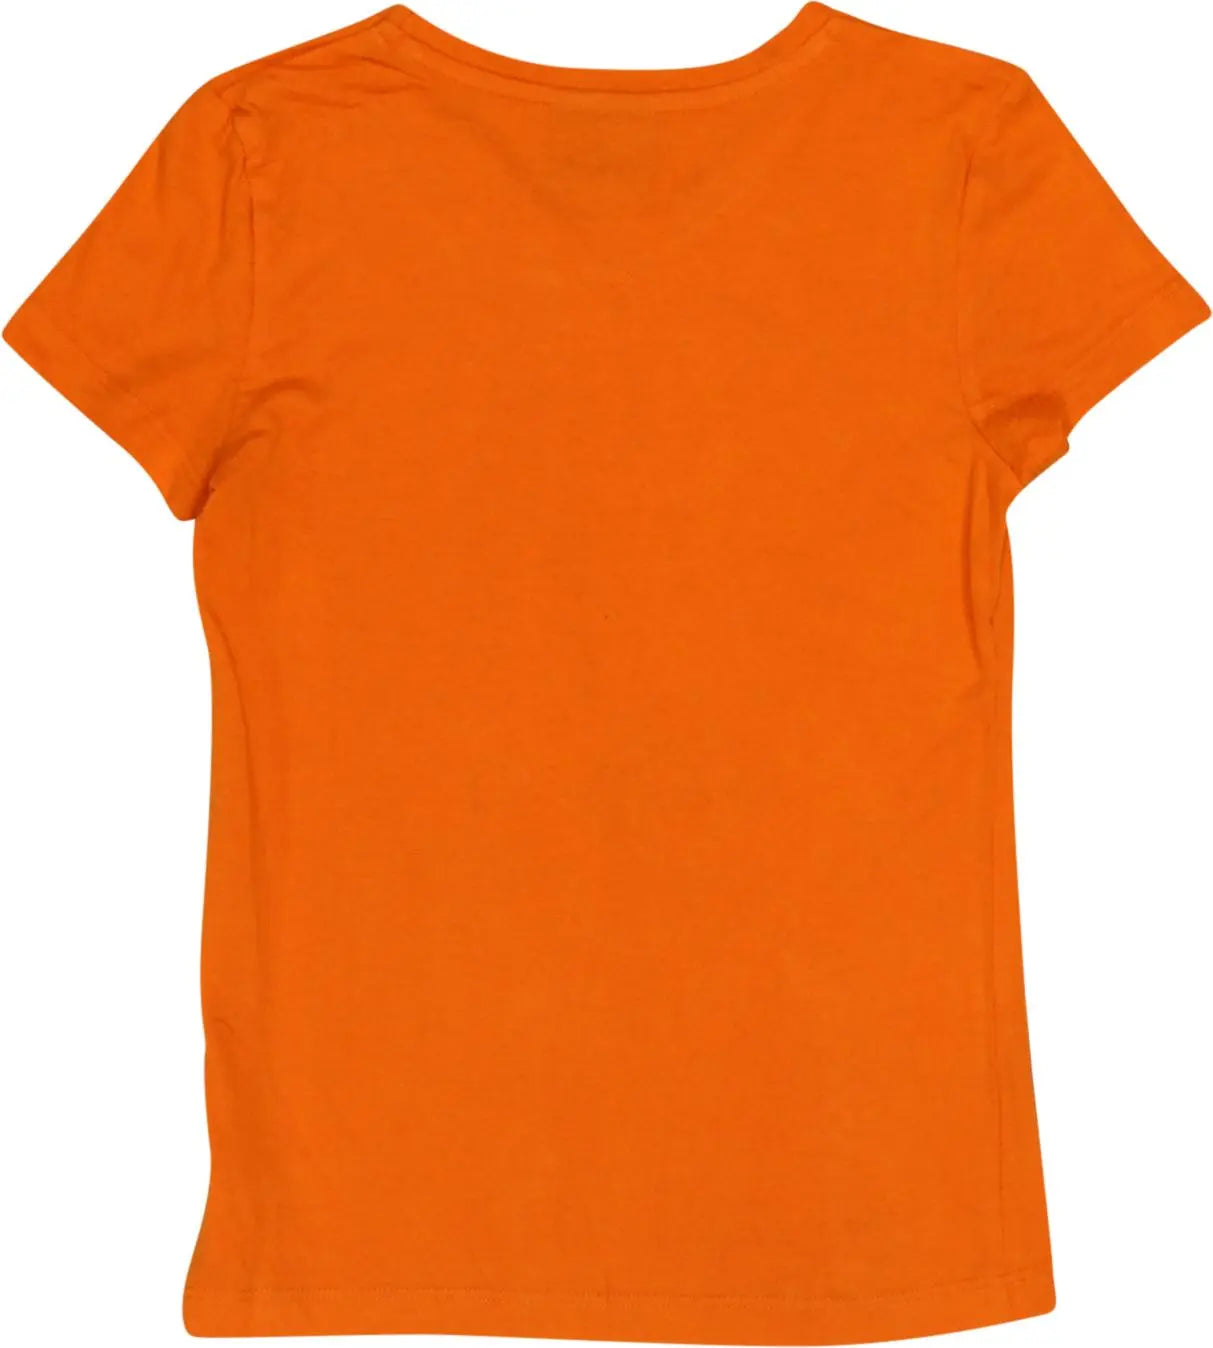 John Cabot - Orange T-shirt- ThriftTale.com - Vintage and second handclothing